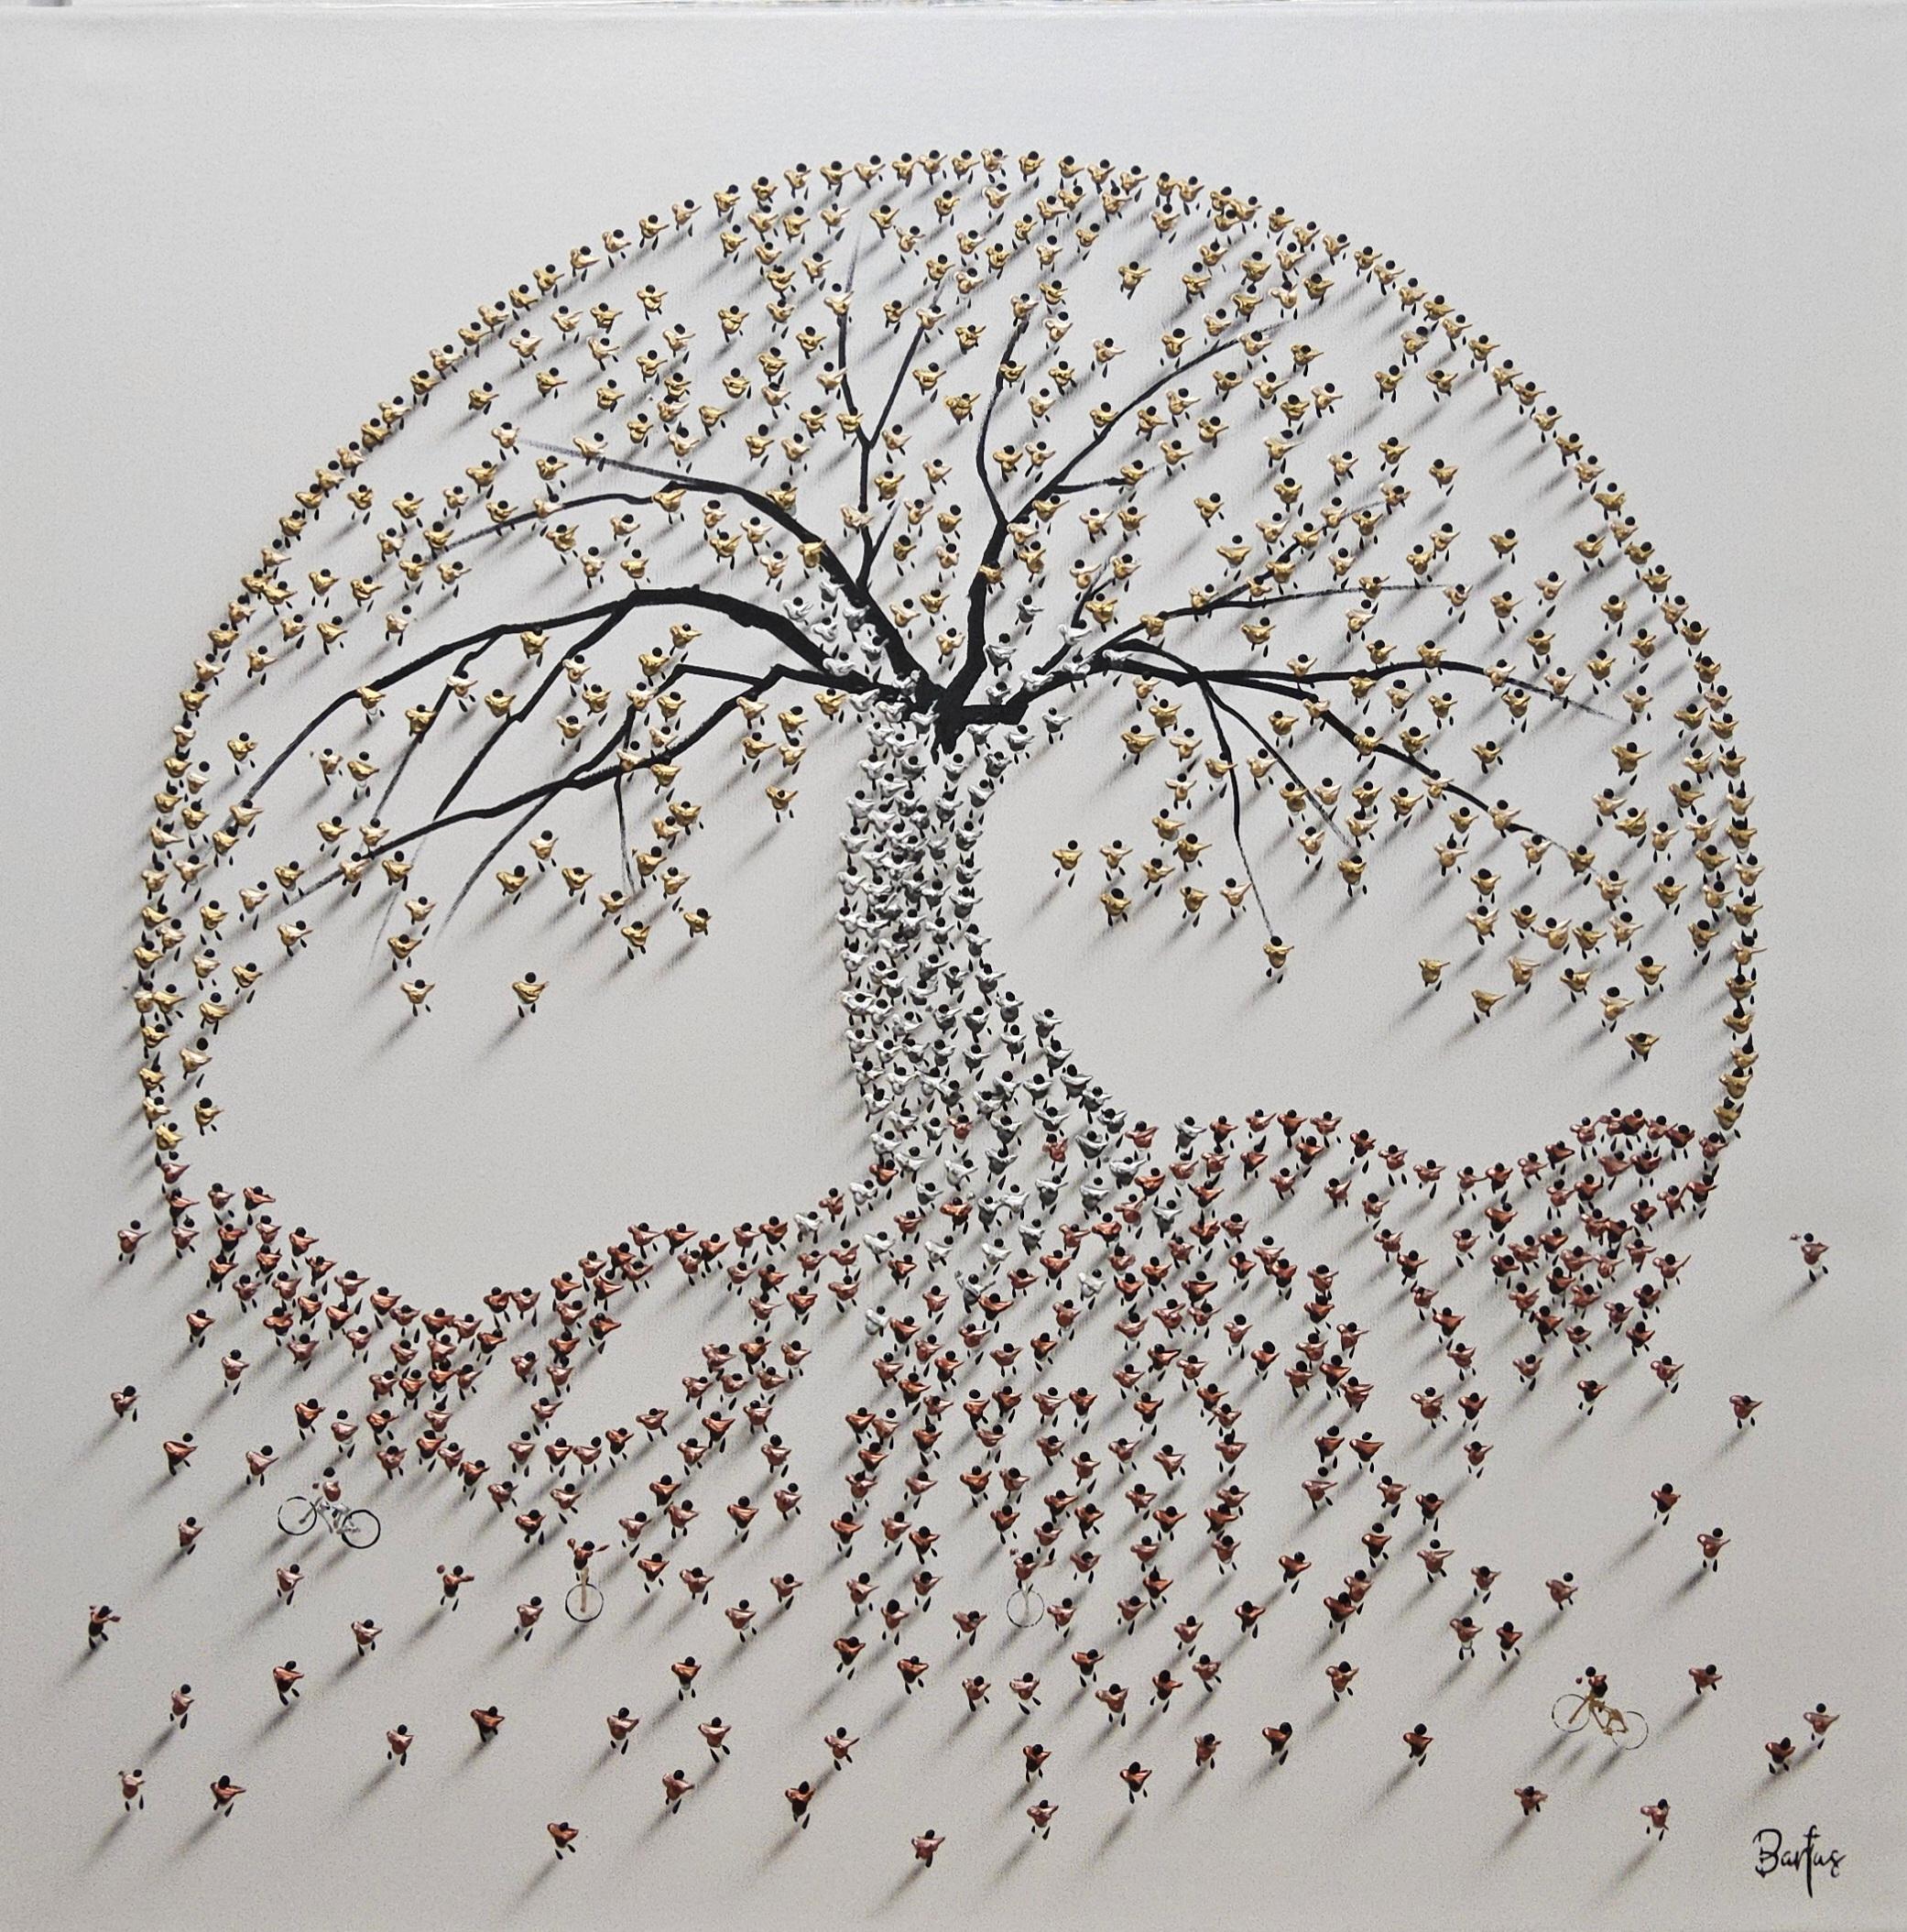 Francisco Bartus, "Tree of Life", 40x40 Metallic Textured Painting on Canvas